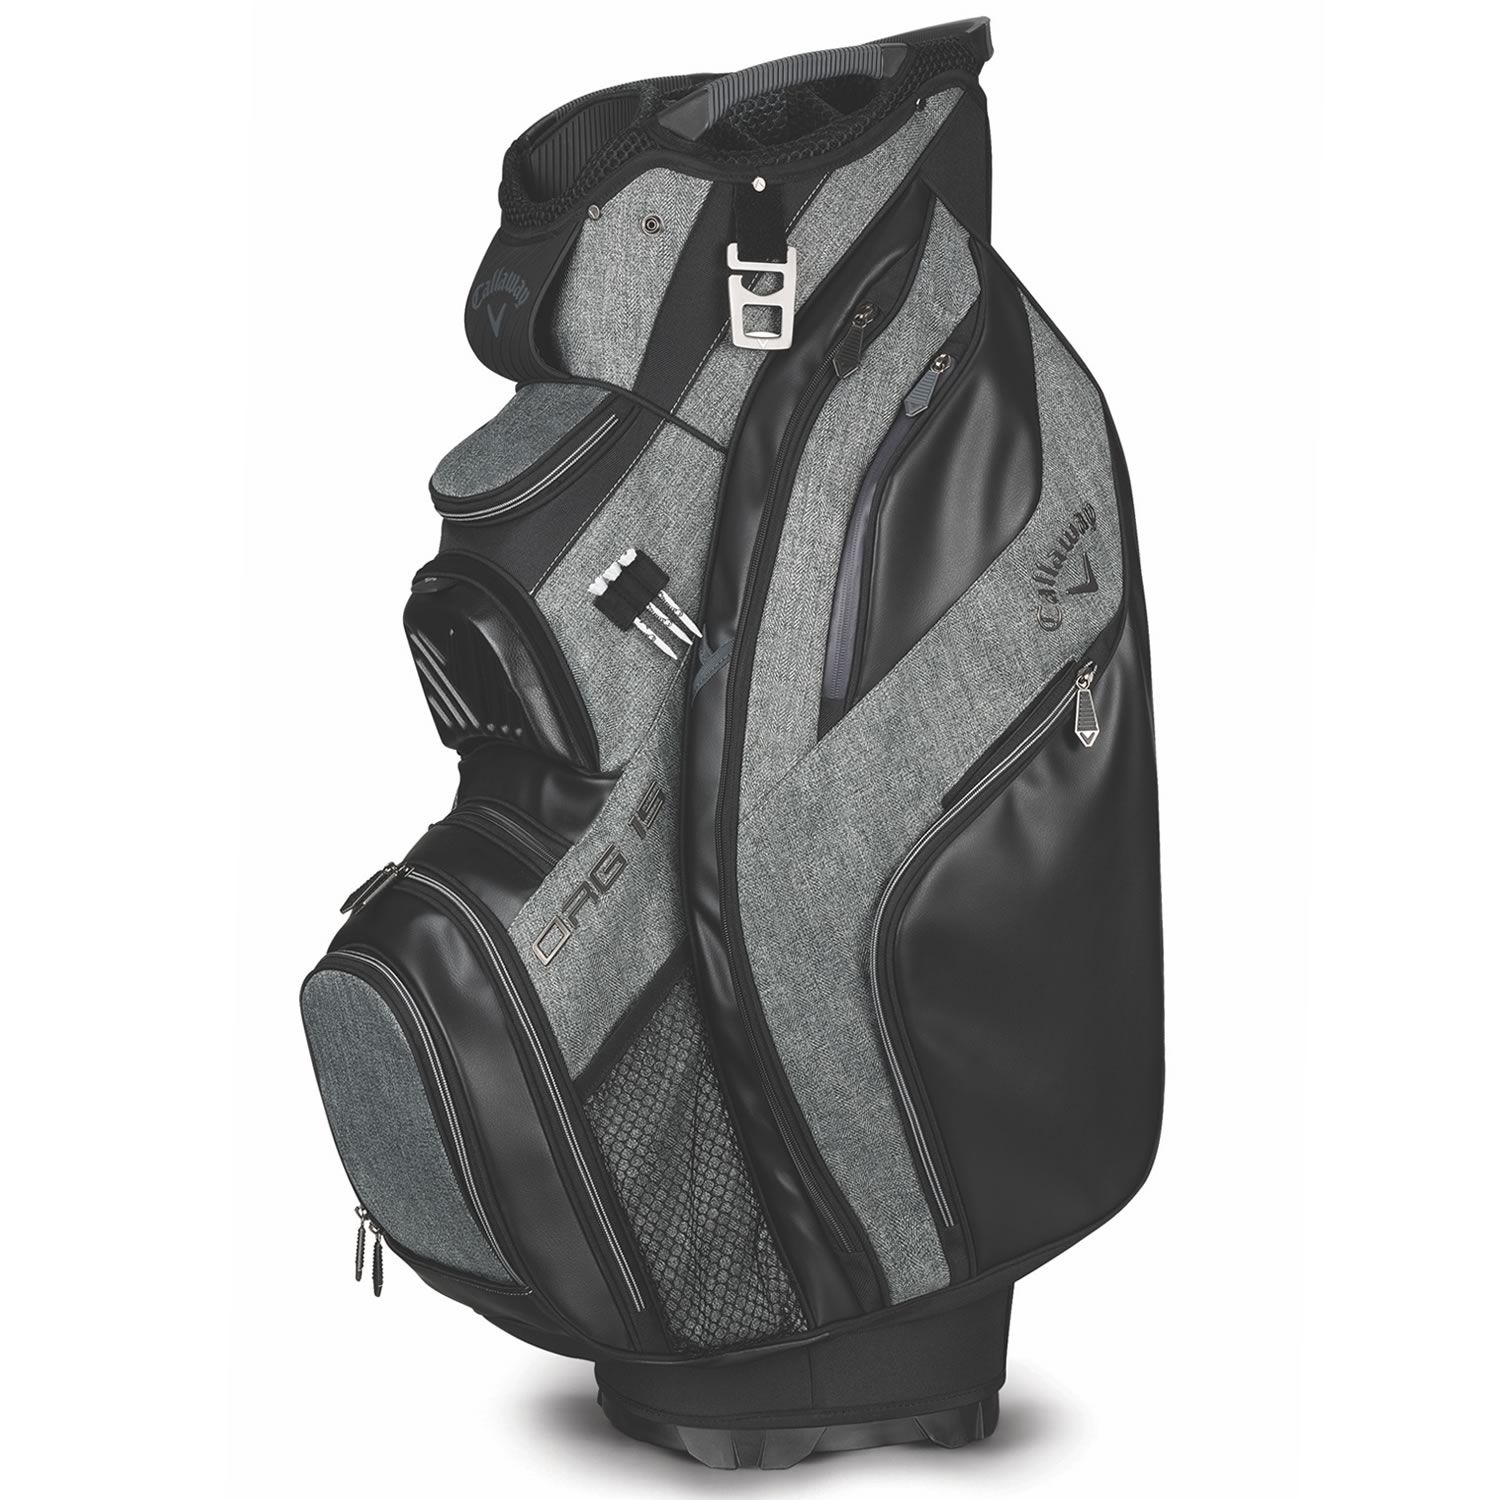 Callaway 2018 Org 15 Golf Cart Bag Black/Titanium/Silver | Scottsdale Golf